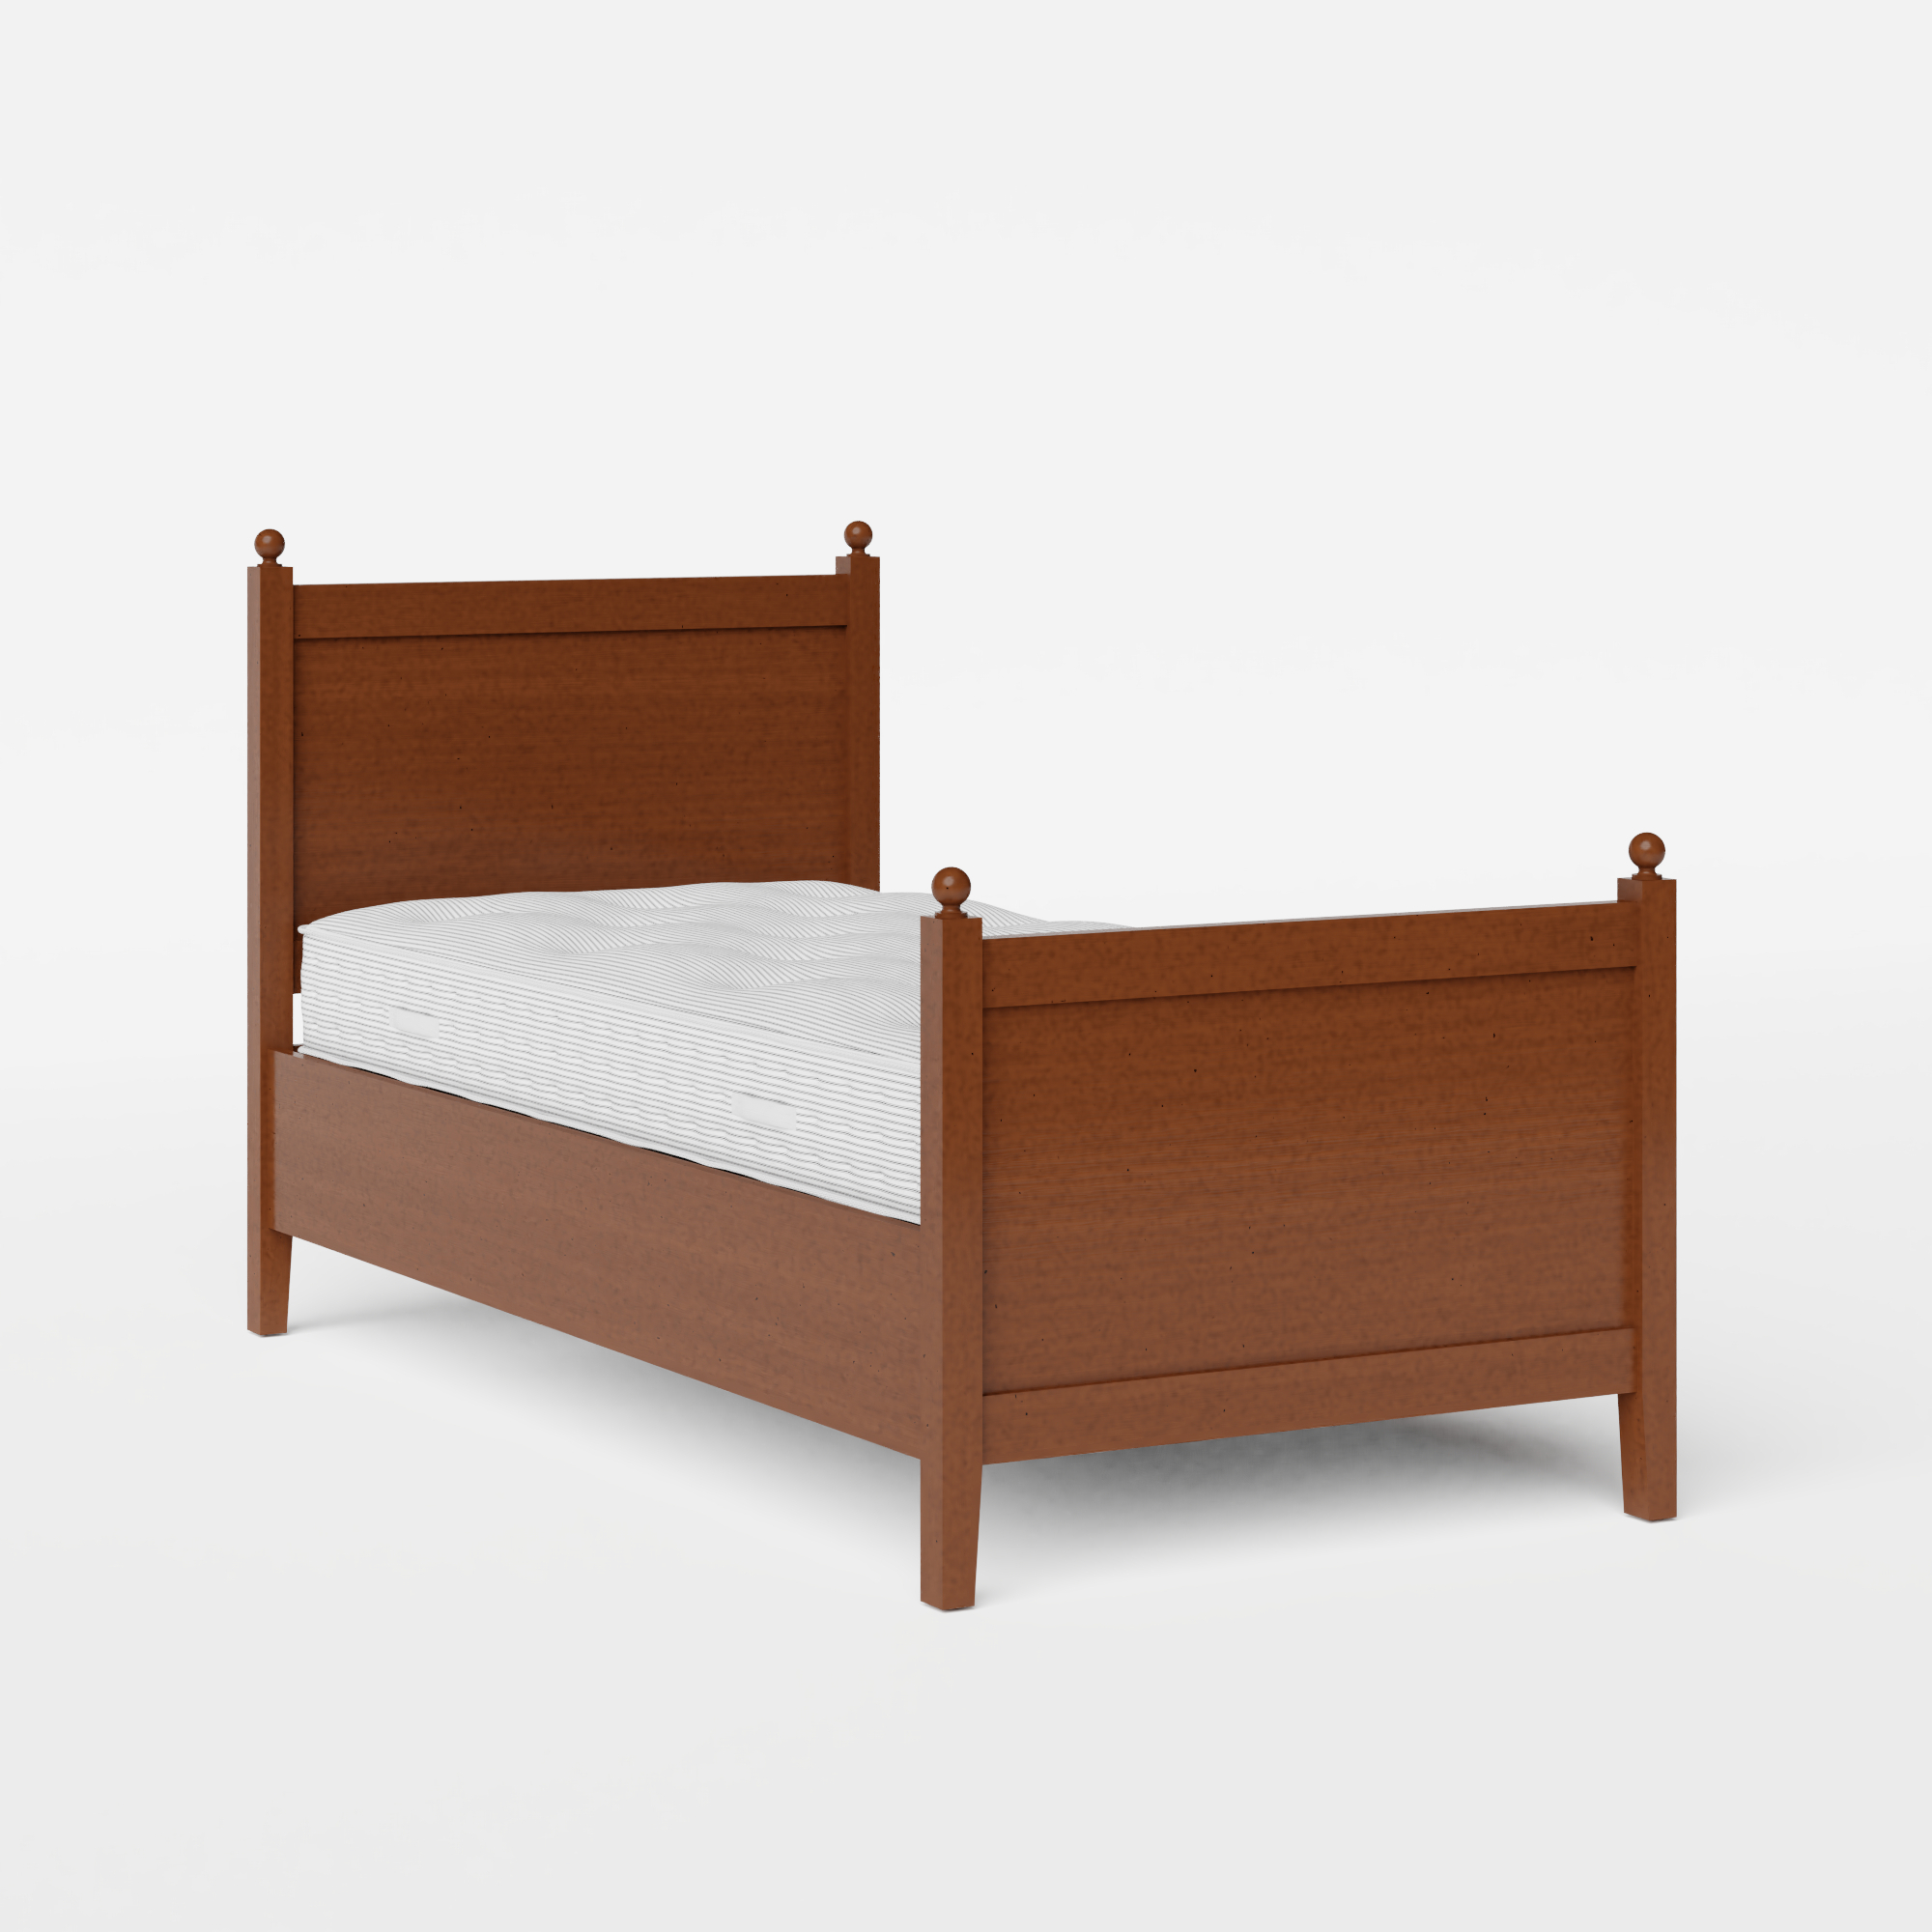 Marbella single wood bed in dark cherry with Juno mattress